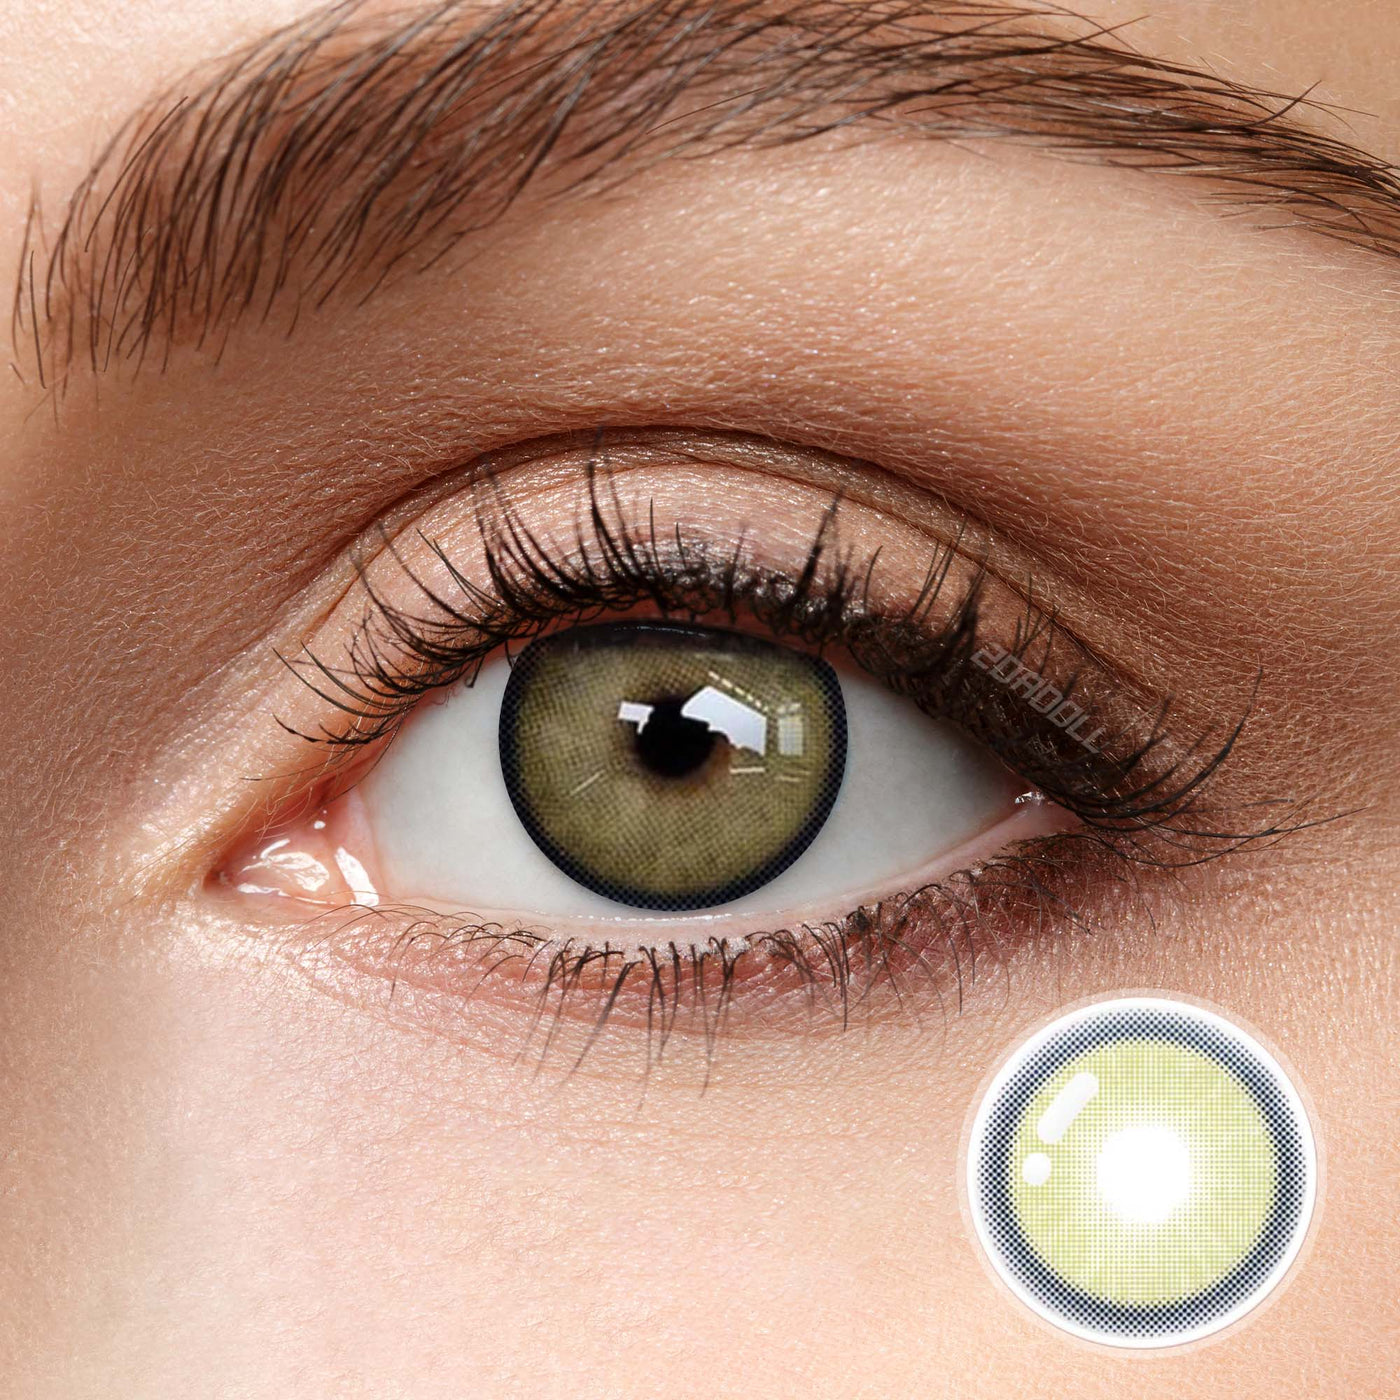 2Dadoll fanta green Contact Lenses(1 pair/6 months)